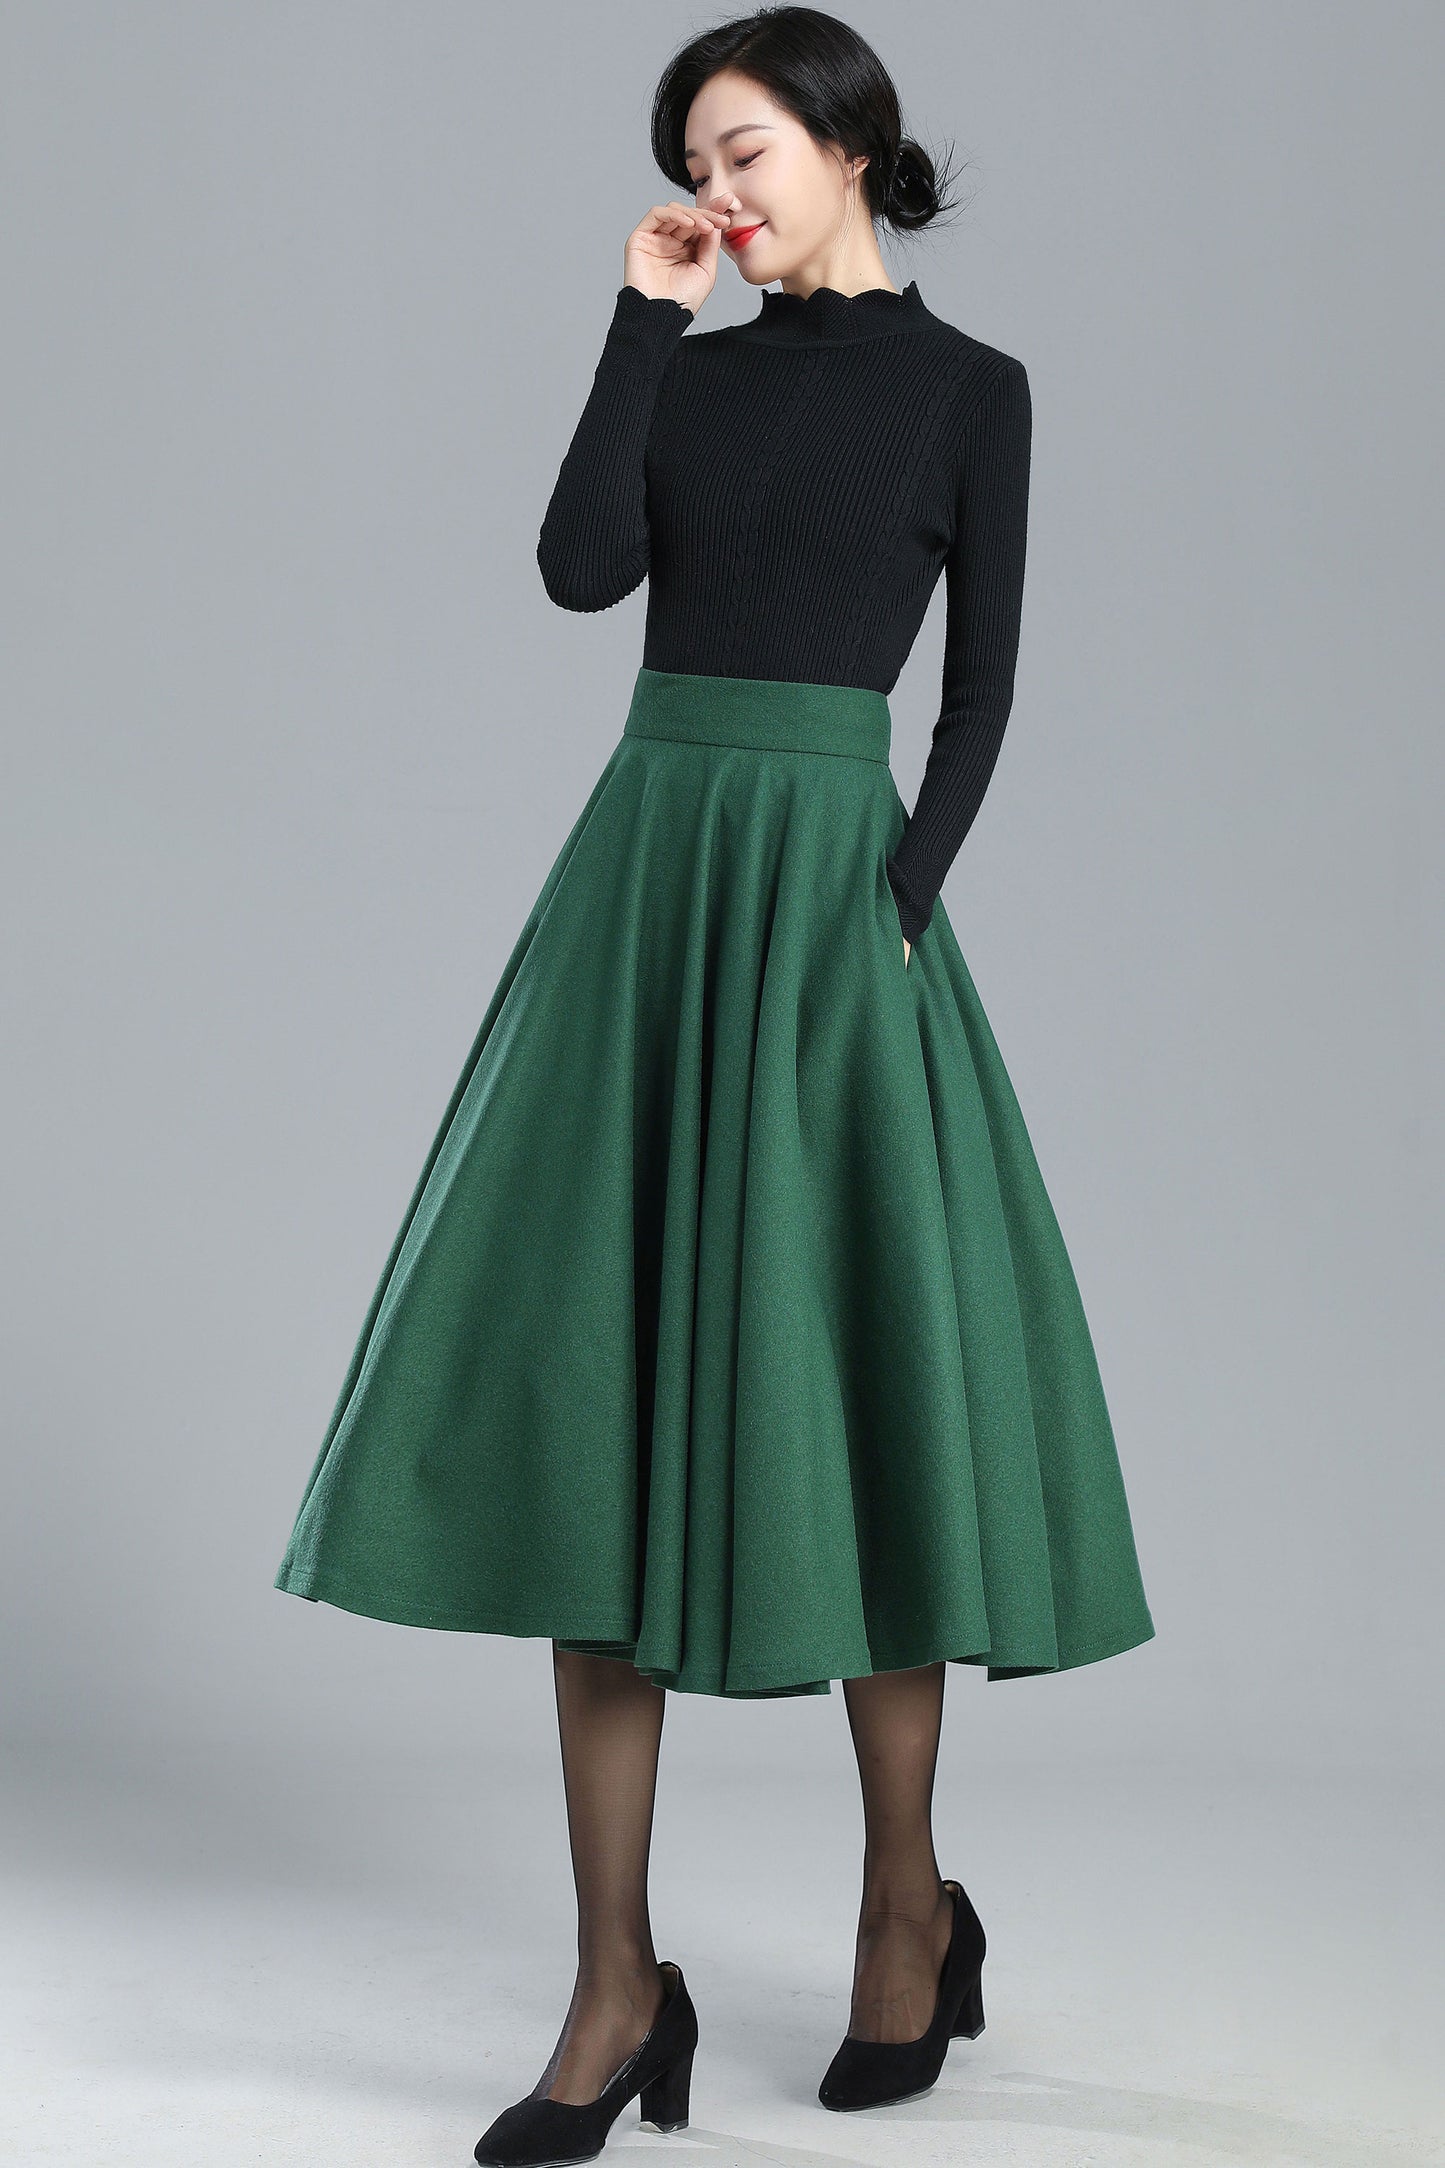 Green Wool Full Circle Winter Skirt 3248